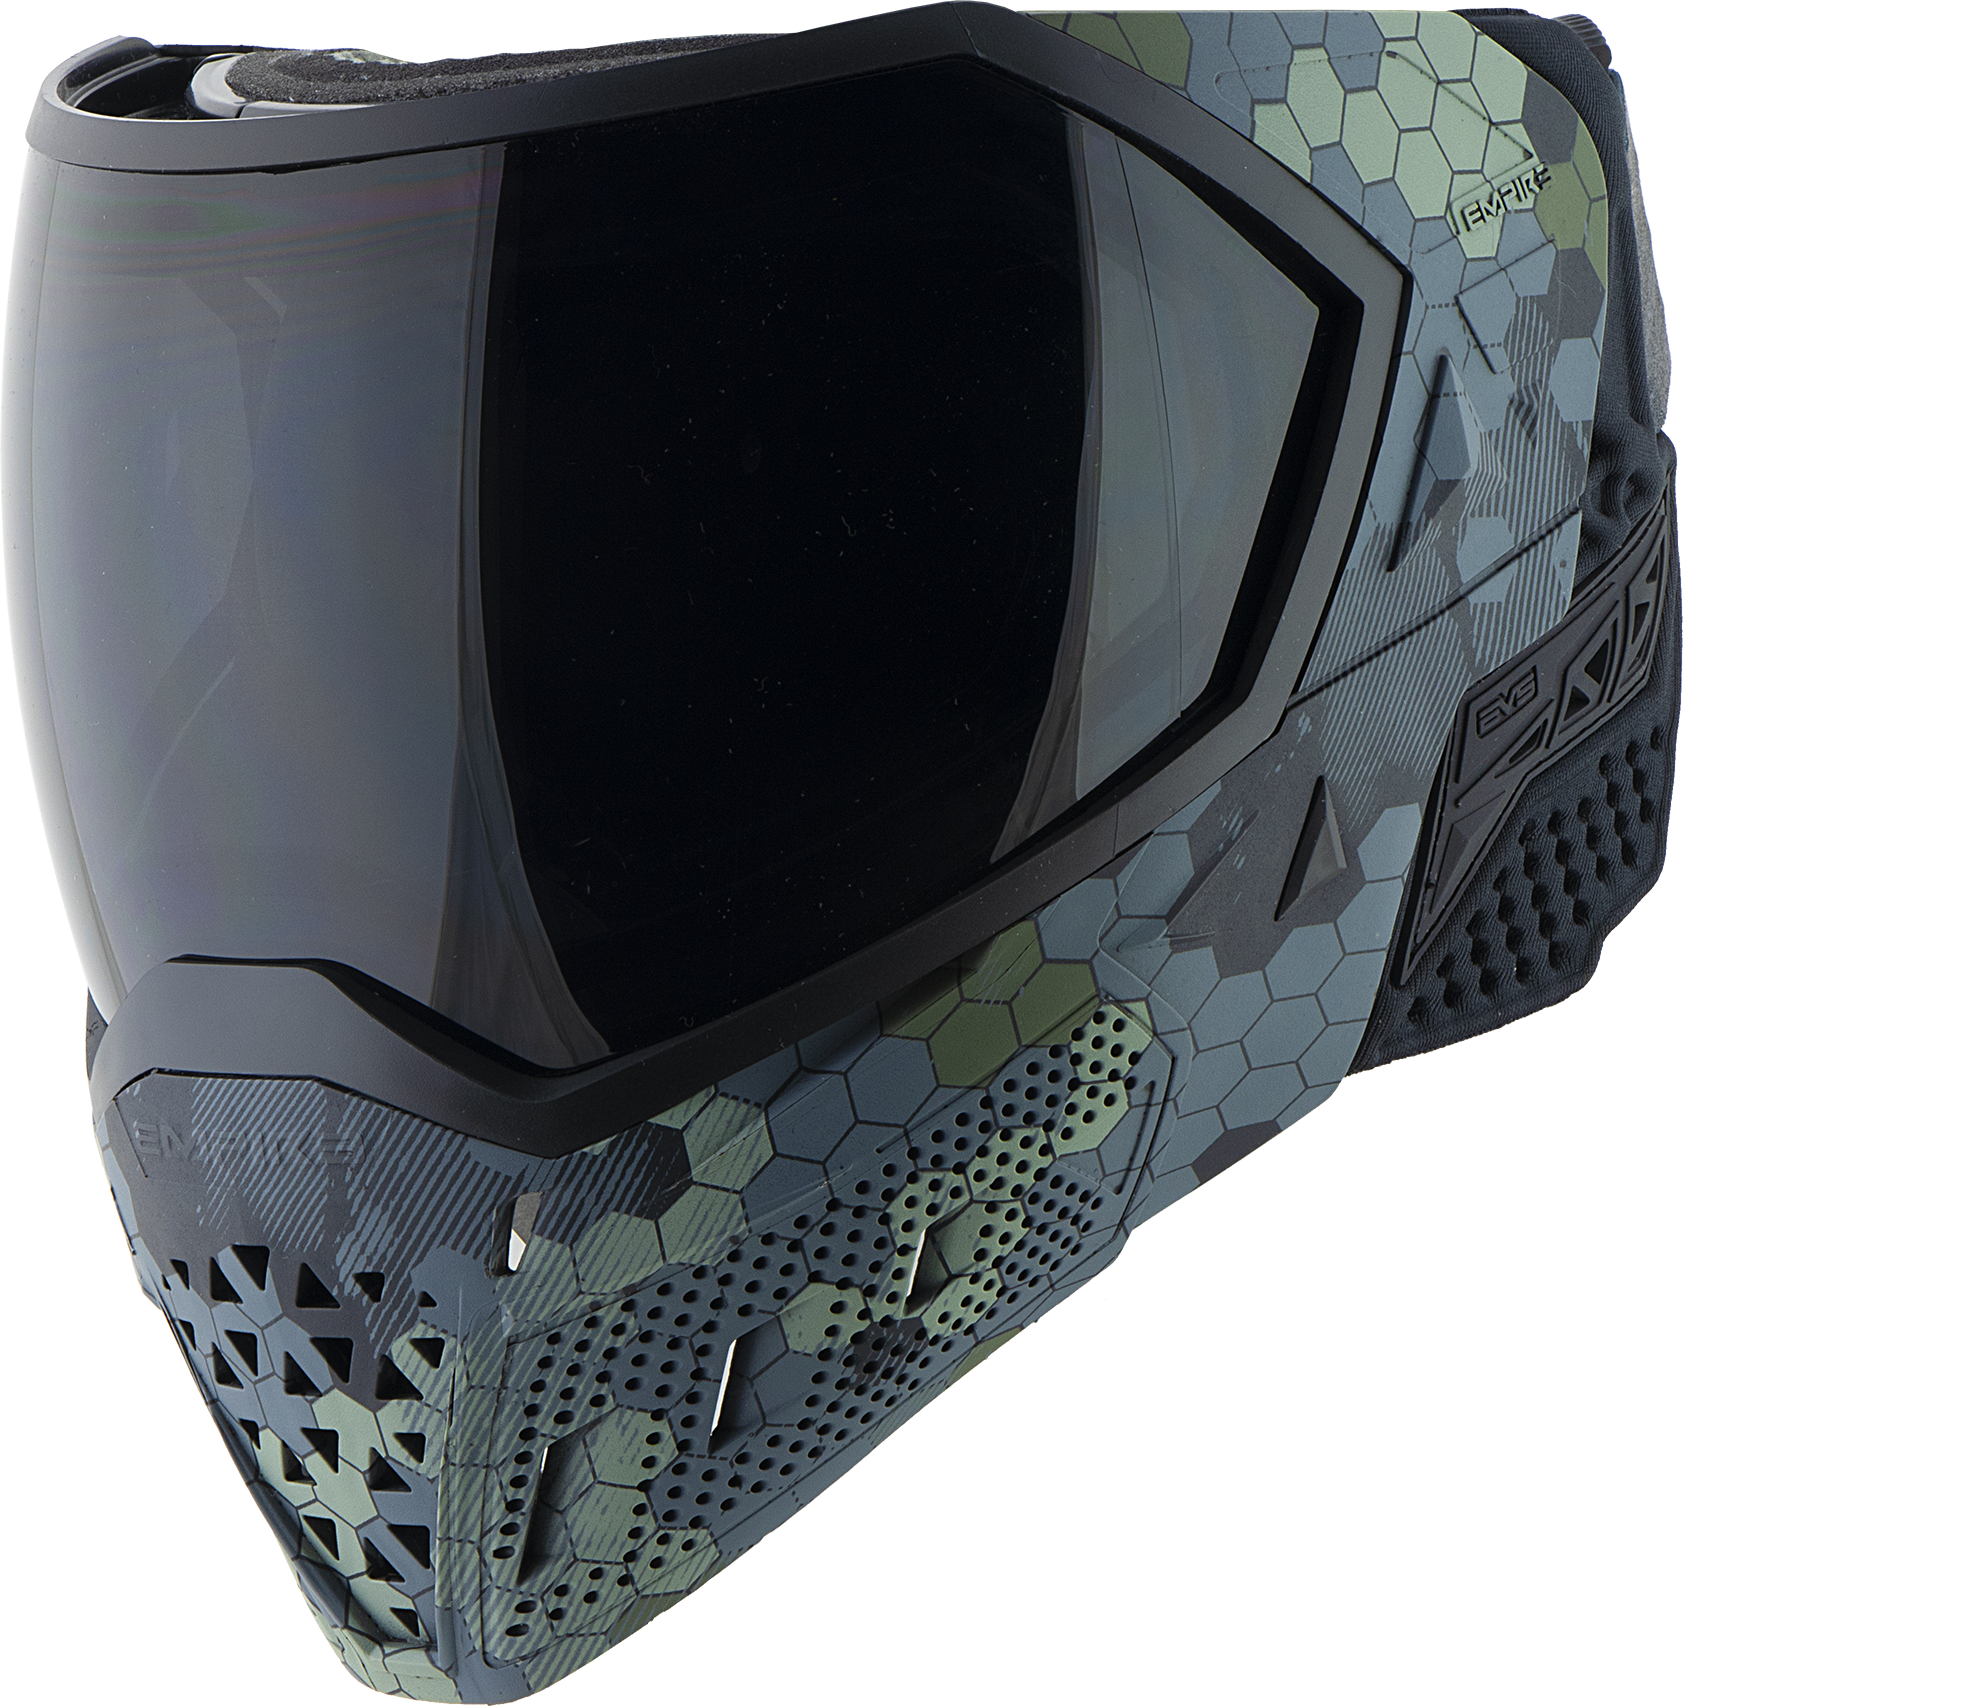 Empire EVS Goggle SE Hex Camo/Black - 2 Thermal Lenses Ninja/Clear